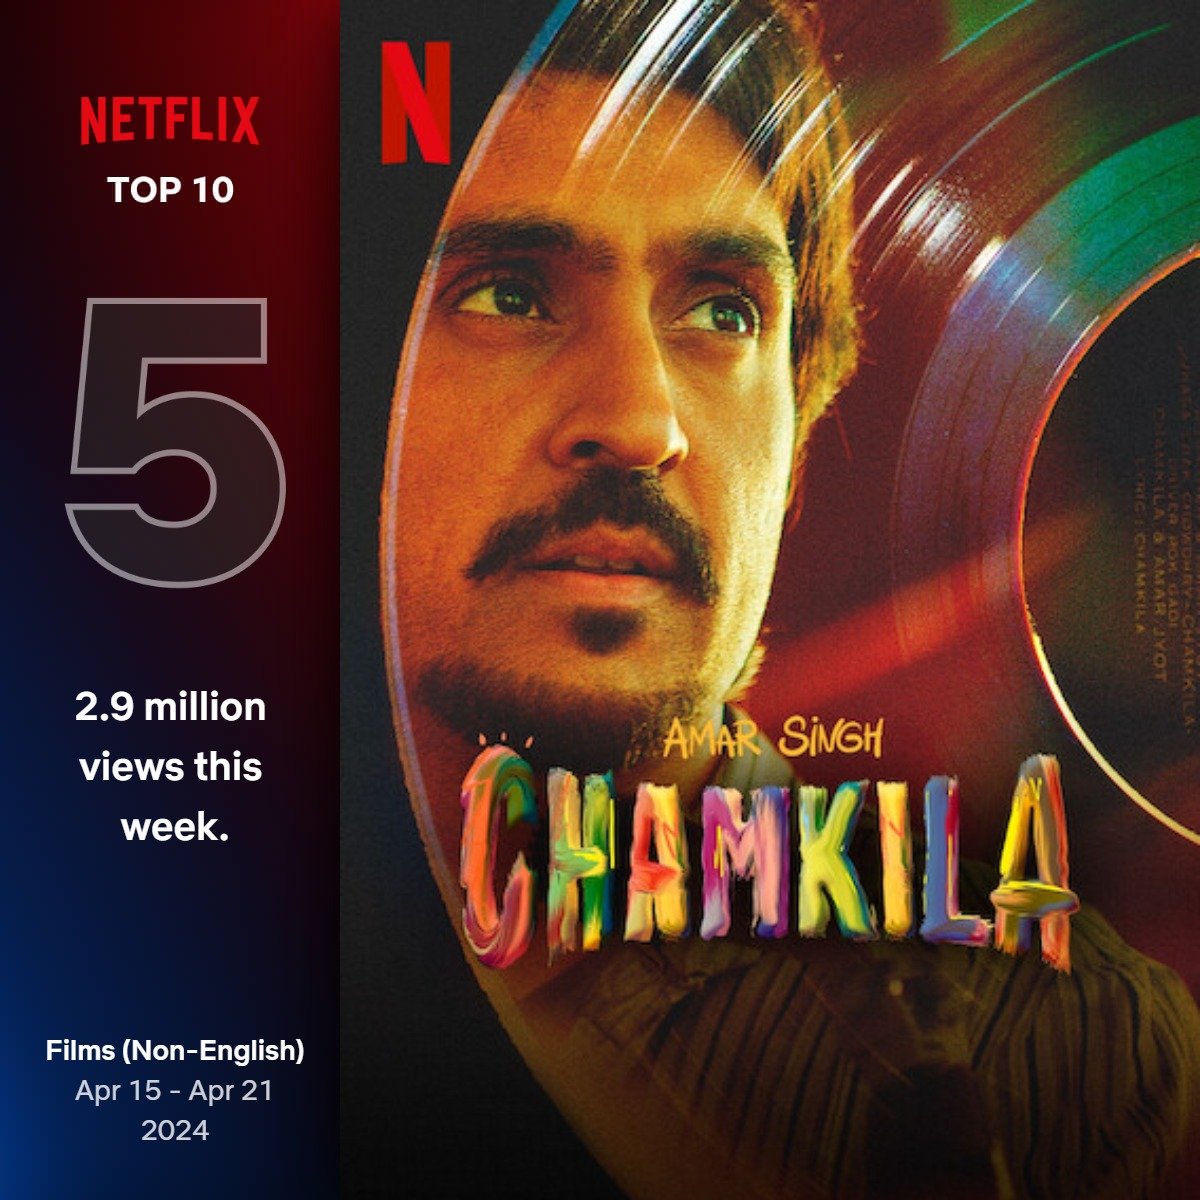 Most Viewed Indian Films on Netflix in 2024

1. #Fighter - 14M
2. #Animal - 13.6M
3. #Dunki - 10.8M
4. #Bhakshak - 10.4M
5. #MurderMubarak - 6.3M
6. #AmarSinghChamkila - 5.3M*
7. #GunturKaaram - 4.9M
8. #HiNanna - 4.2M
9. #AnweshippinKandethum - 3.6M
10. #Salaar - 3.5M